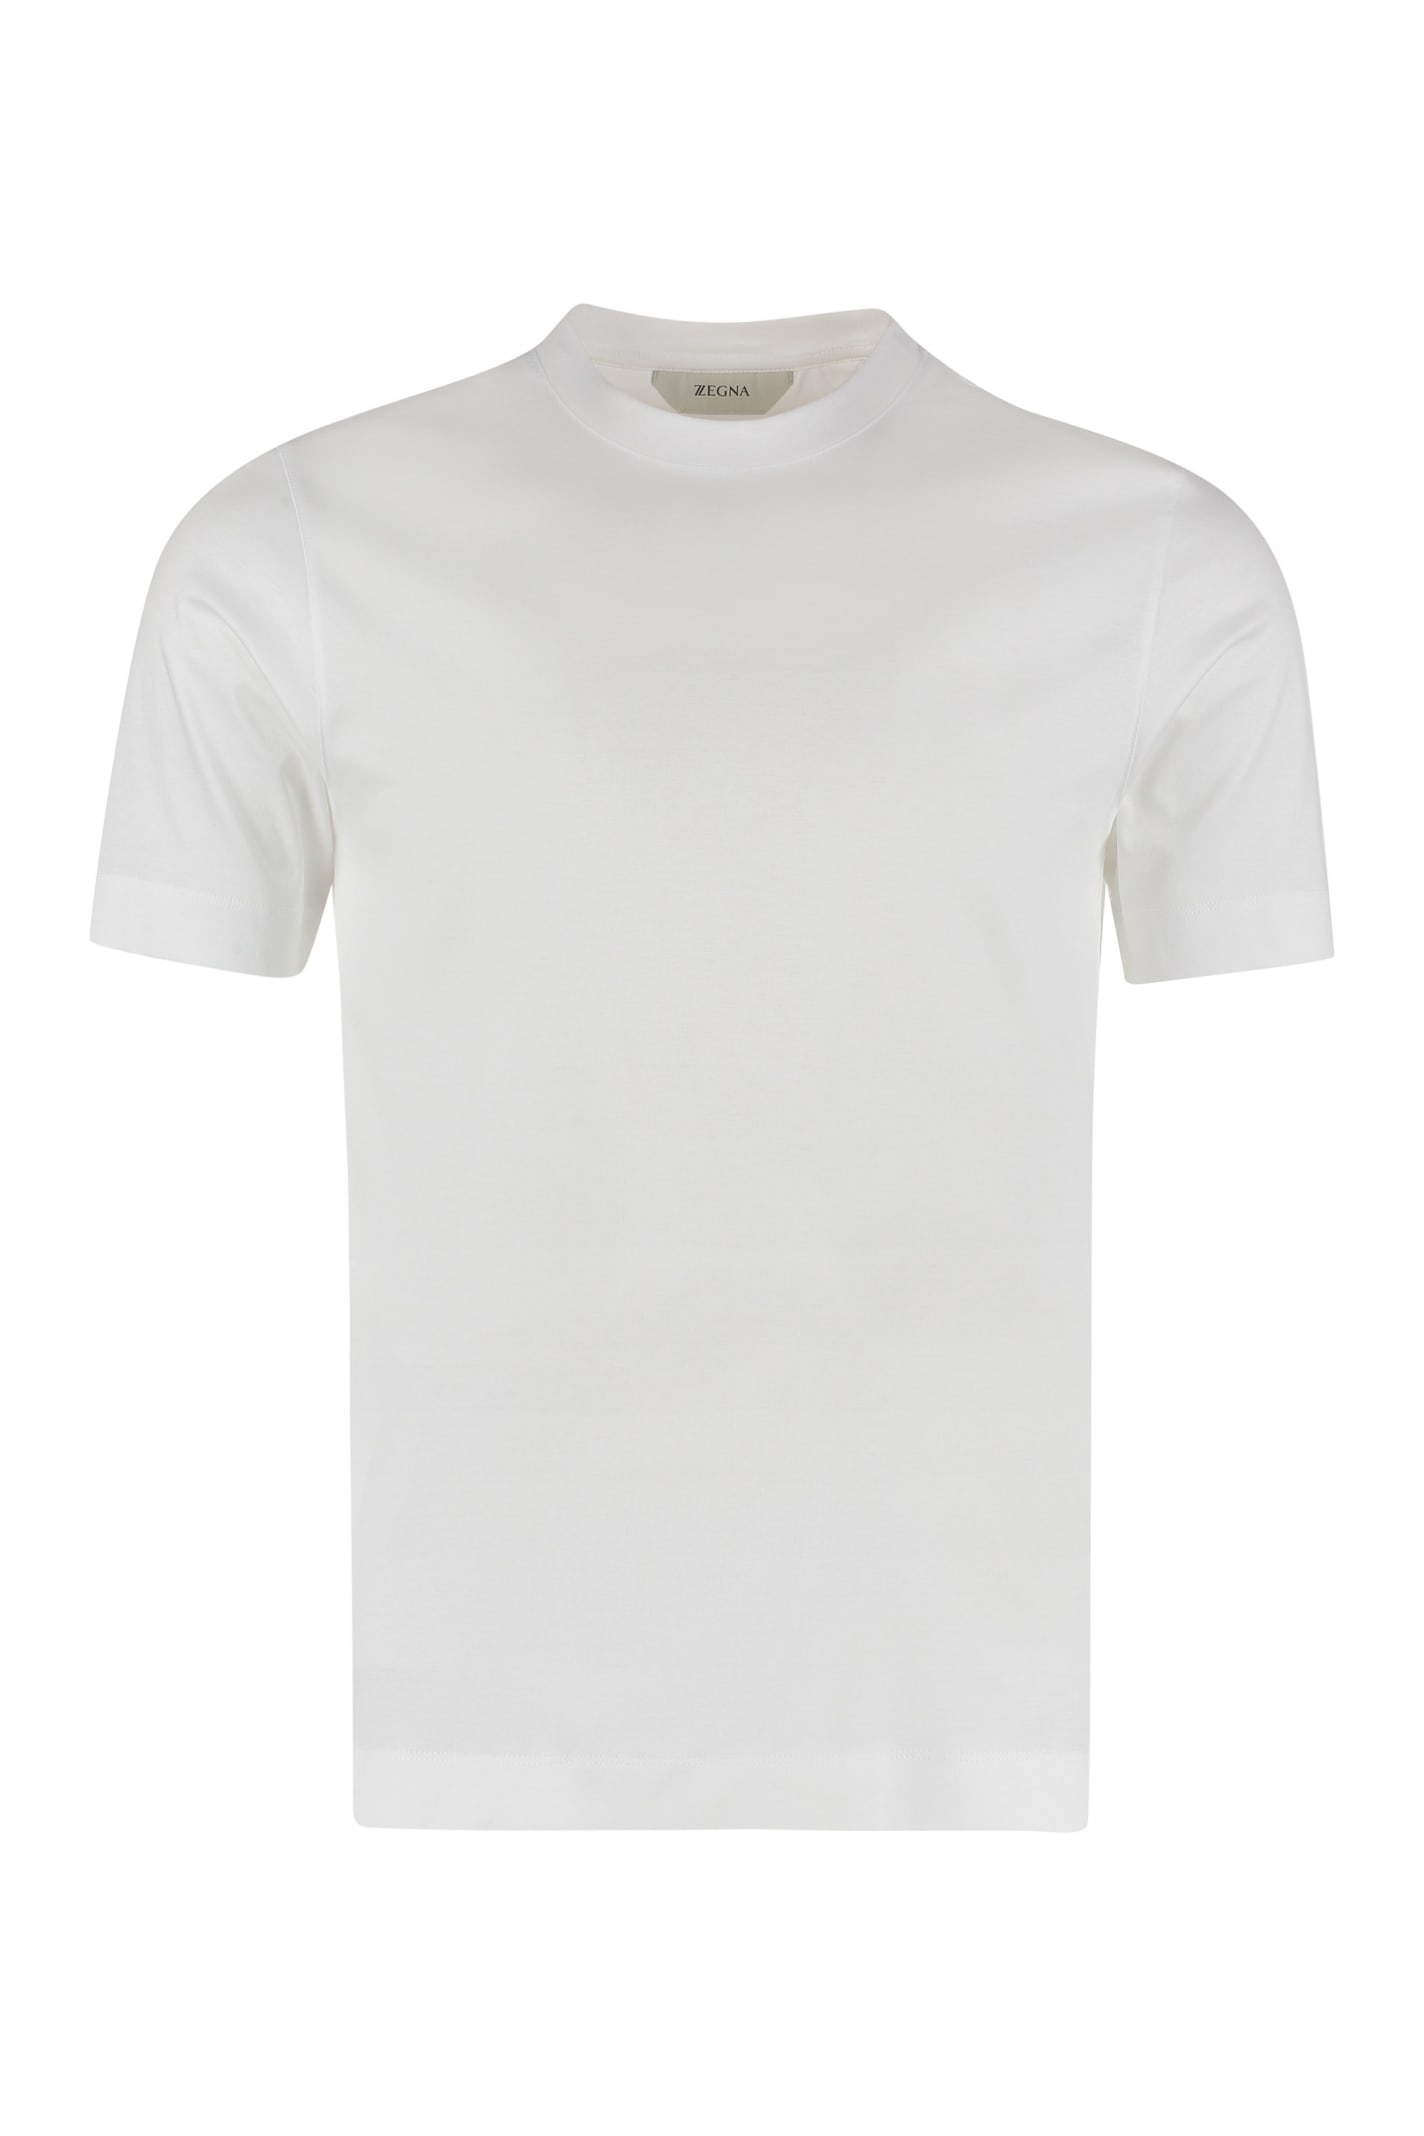 Z Zegna Stretch Cotton T-shirt